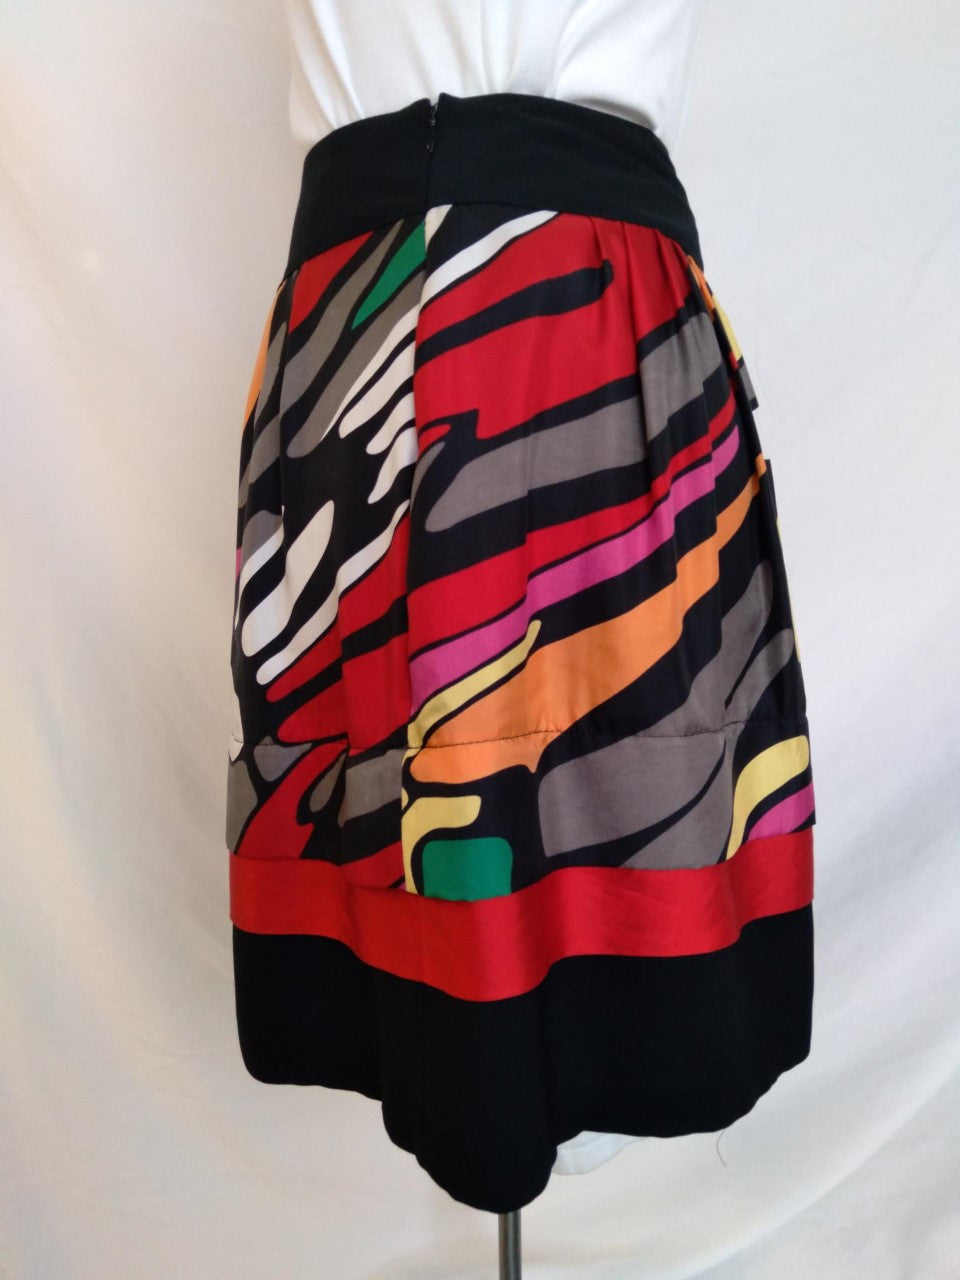 Nygard Multi-color Print 100% Silk Skirt - 2